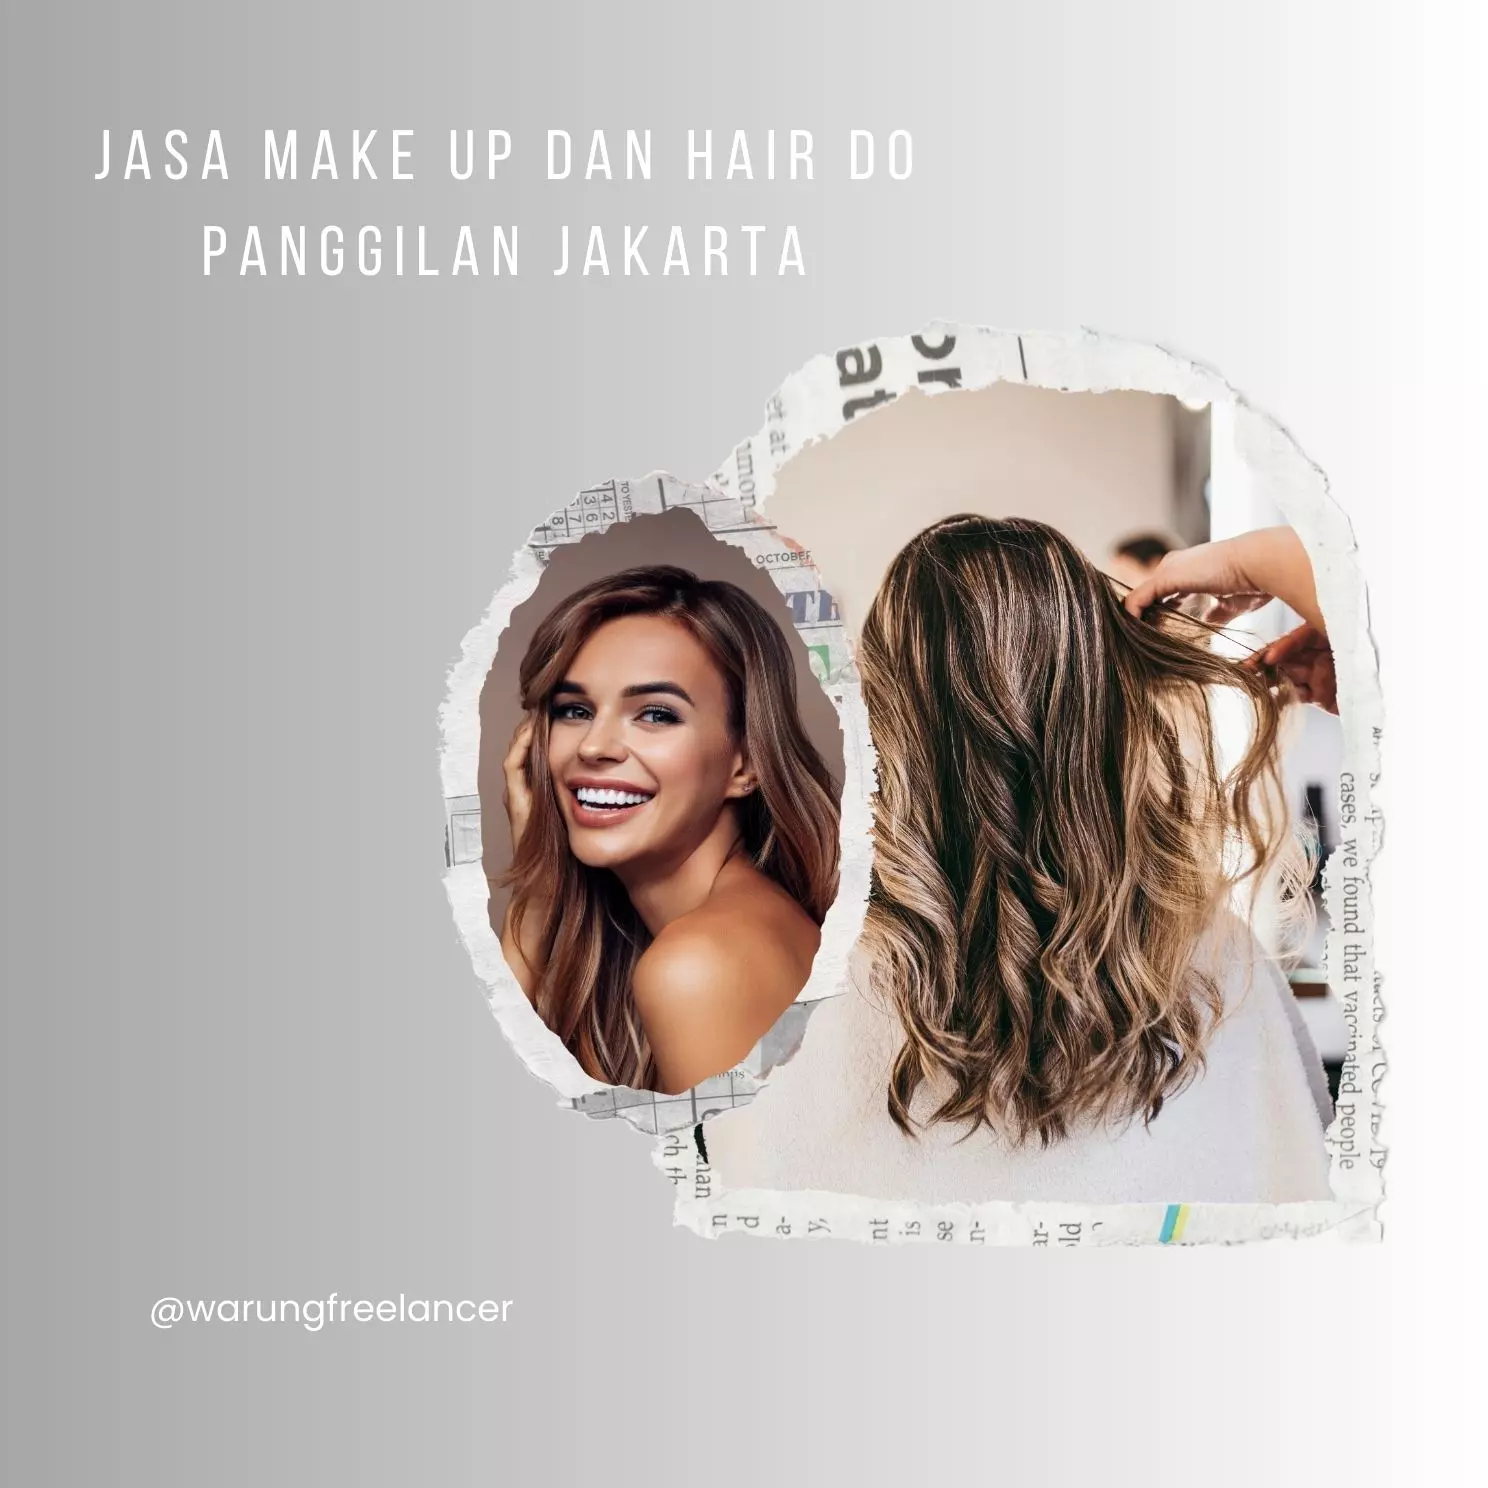 Jasa Make Up dan Hair Do Panggilan Jakarta